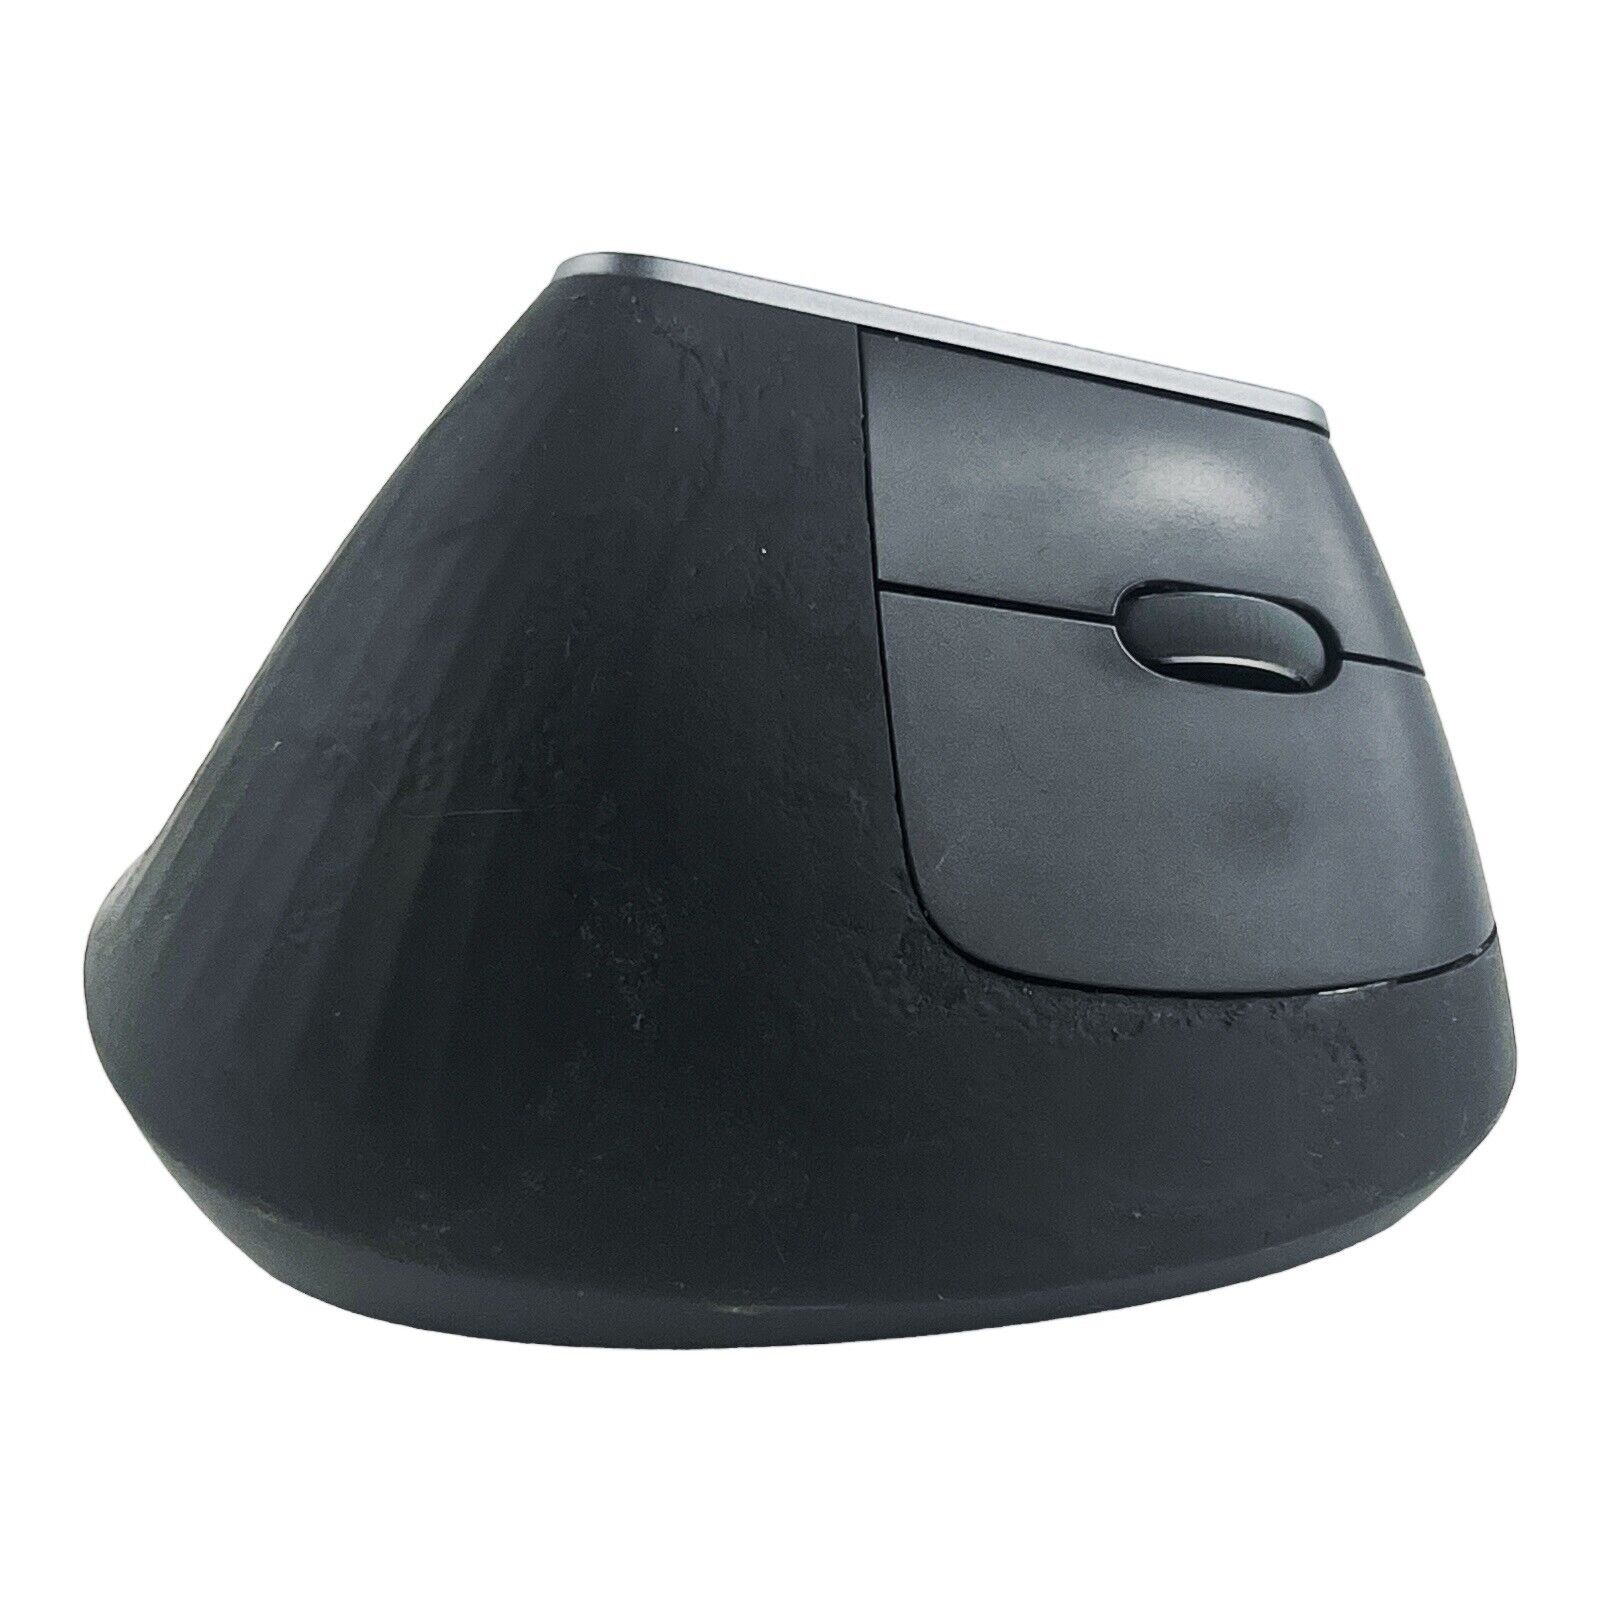 Logitech Logi MX Vertical Ergonomic Bluetooth Wireless Mouse (No Dongle)